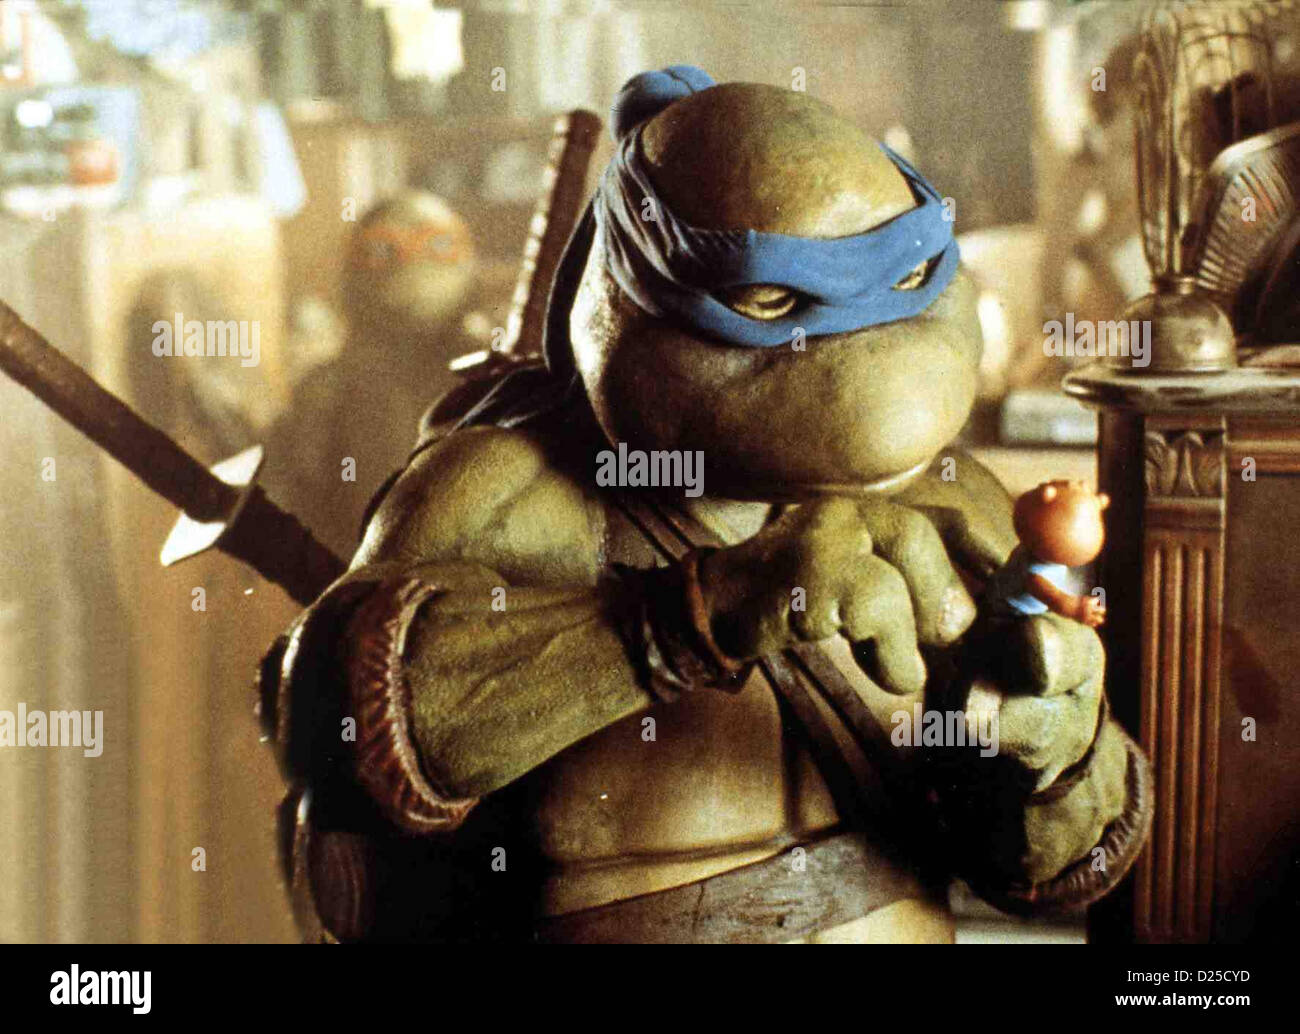 Teenage mutant ninja turtles movie hi-res stock photography and images -  Alamy